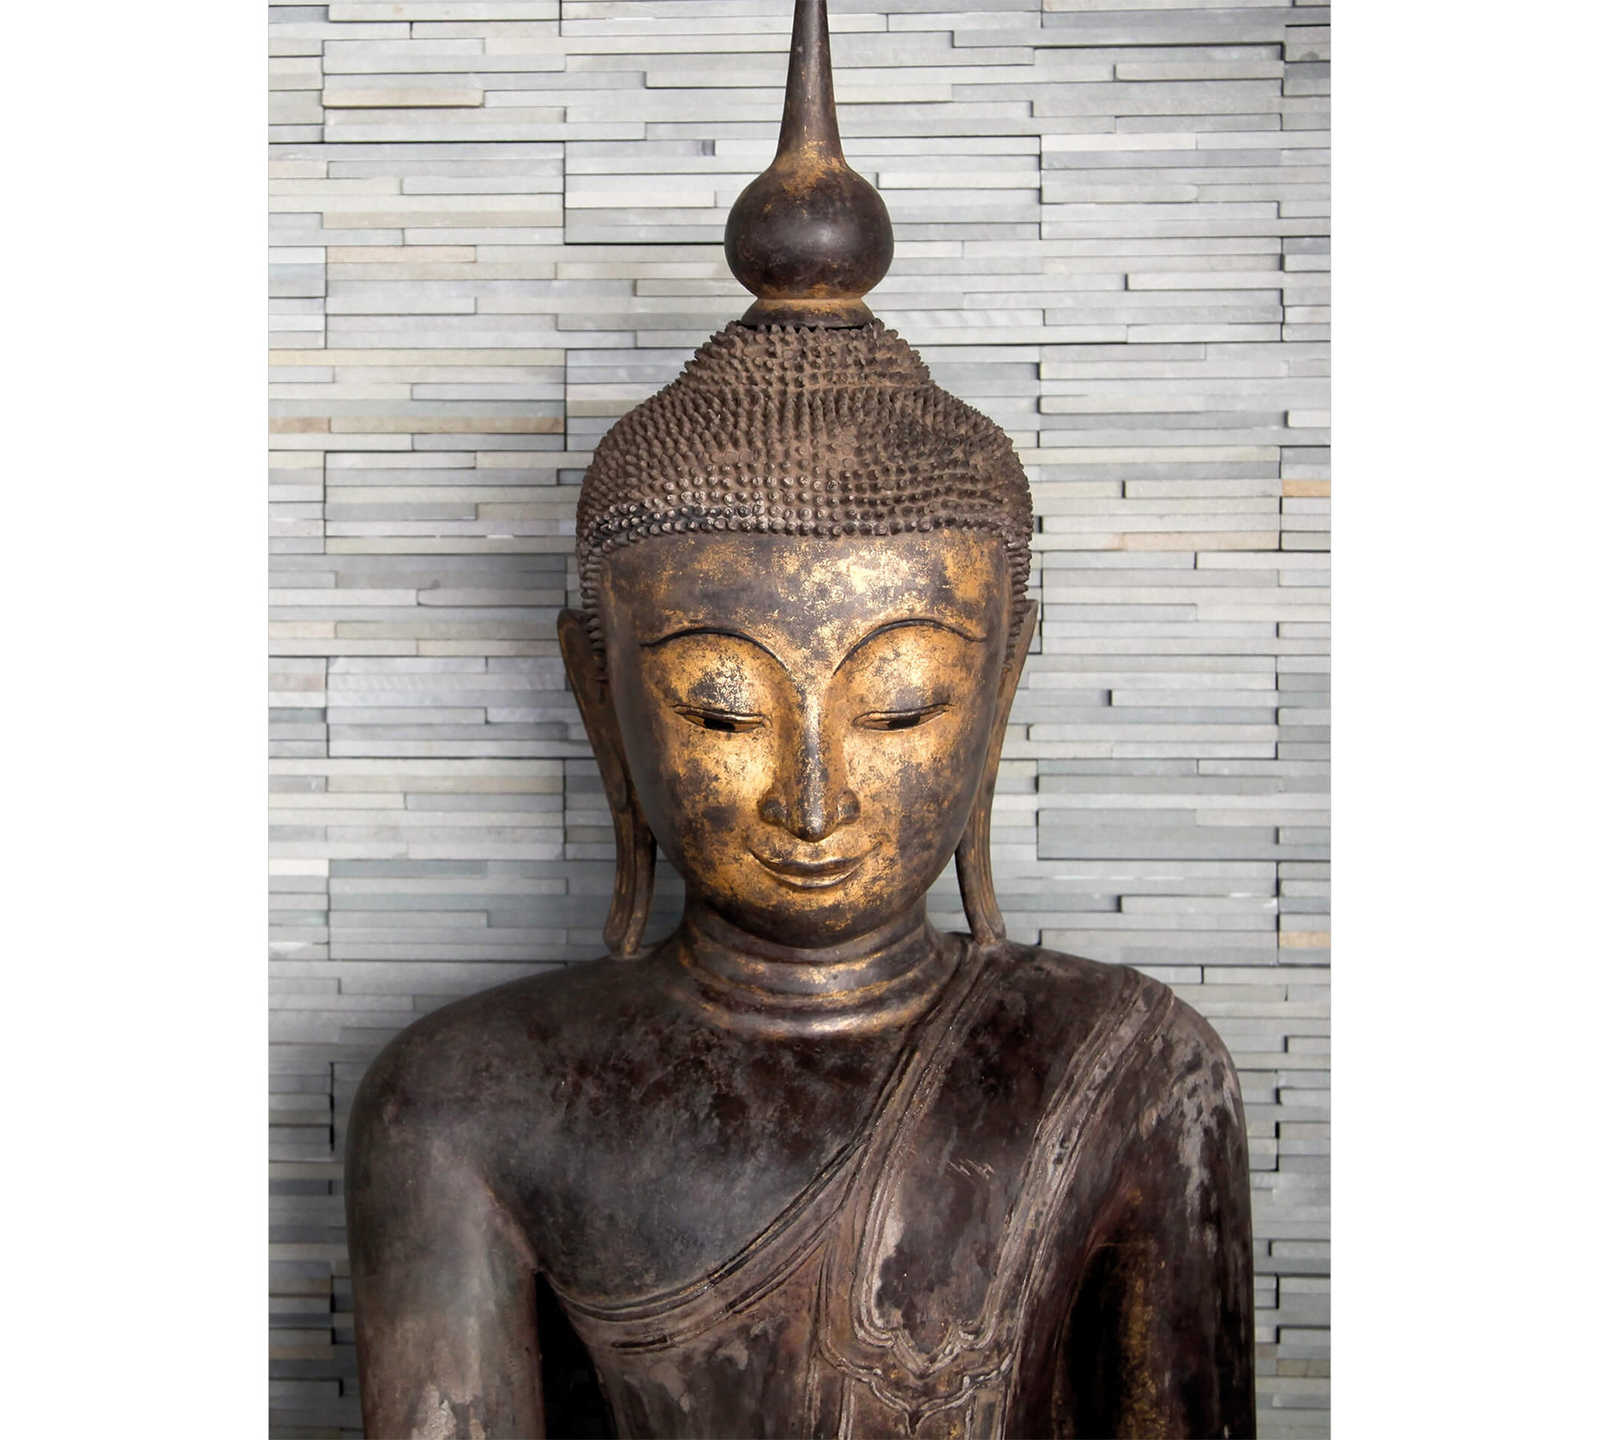         Photo wallpaper narrow with Buddha - Brown, Grey
    